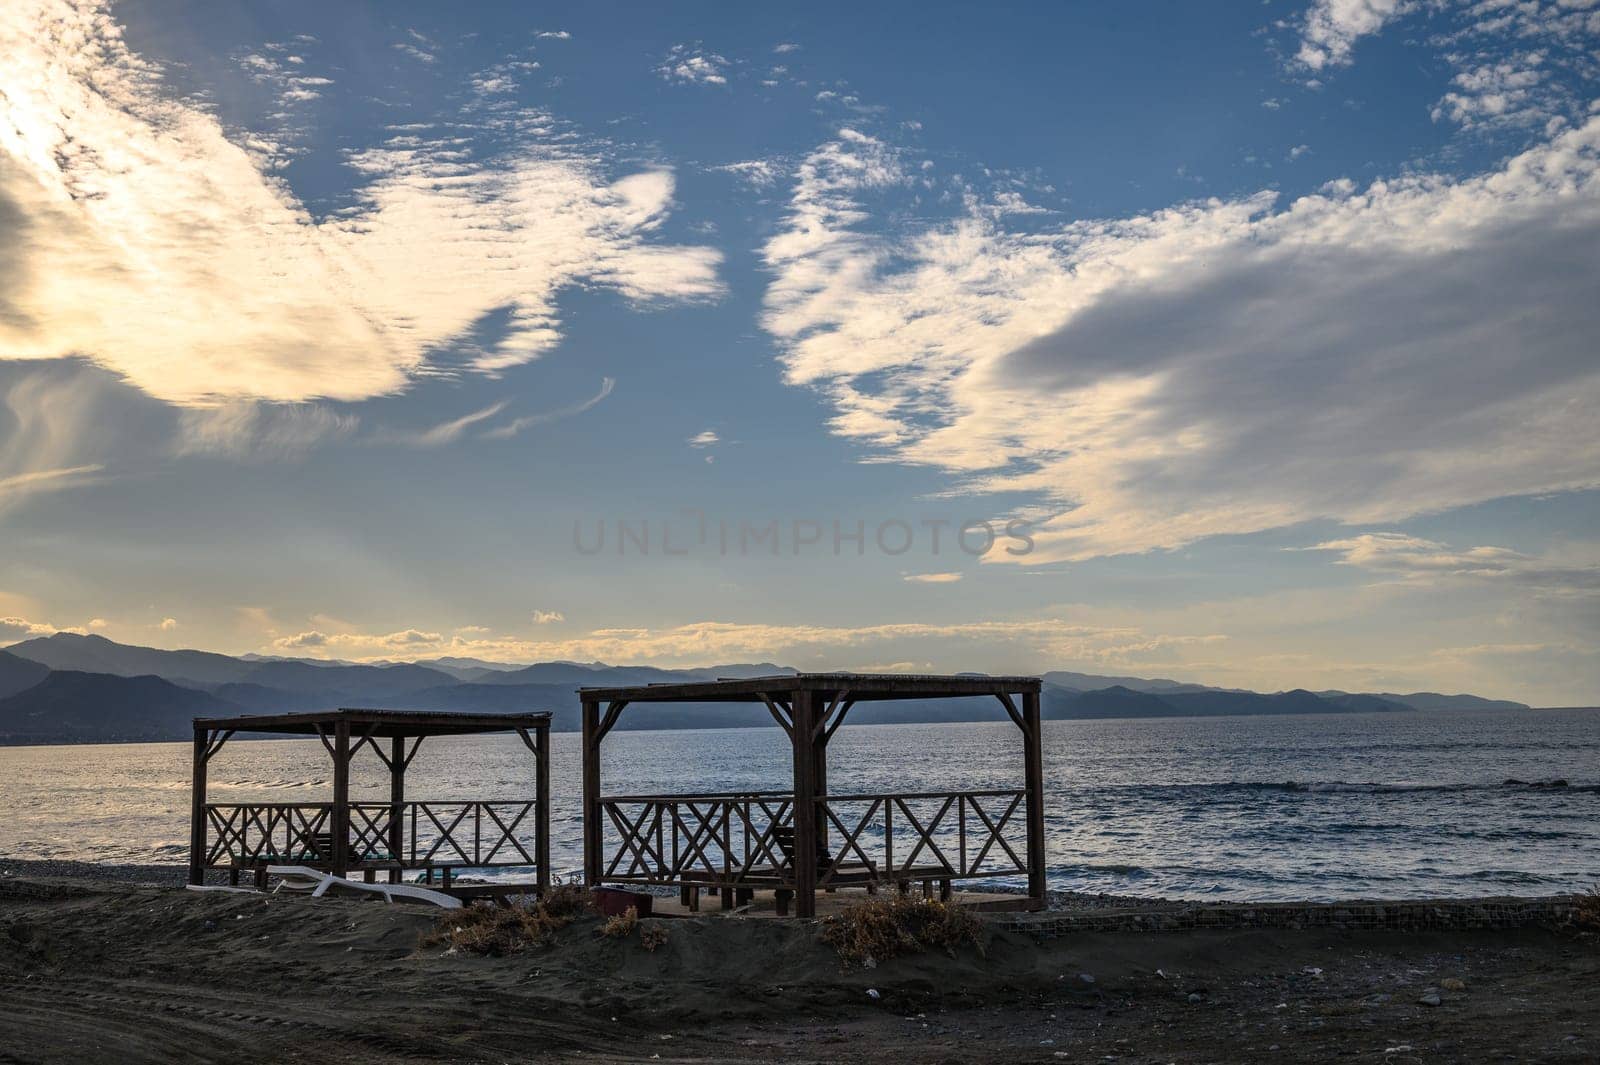 beach gazebo with sun loungers on the Mediterranean beach 3 by Mixa74